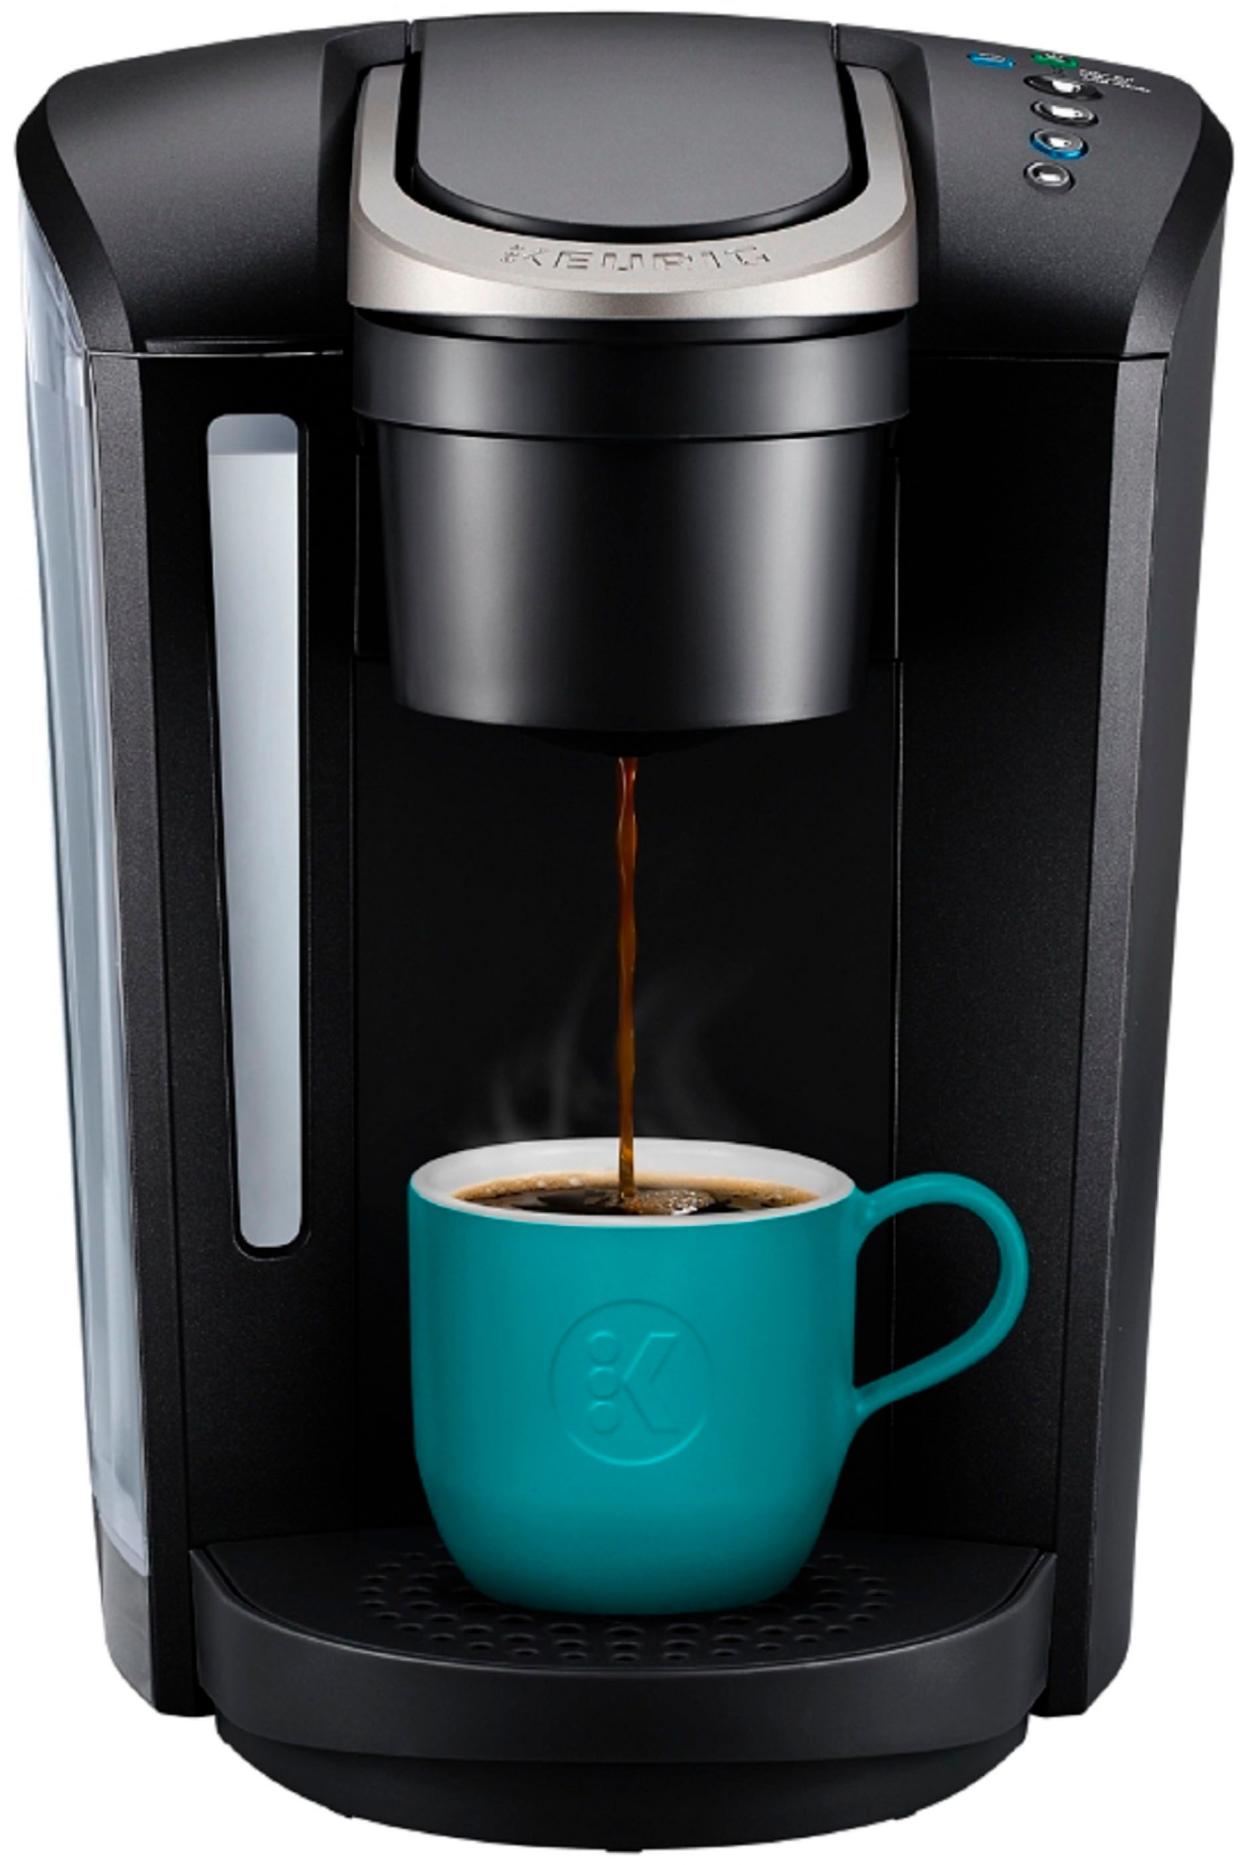 Keurig K-Select Single Serve Coffee Maker